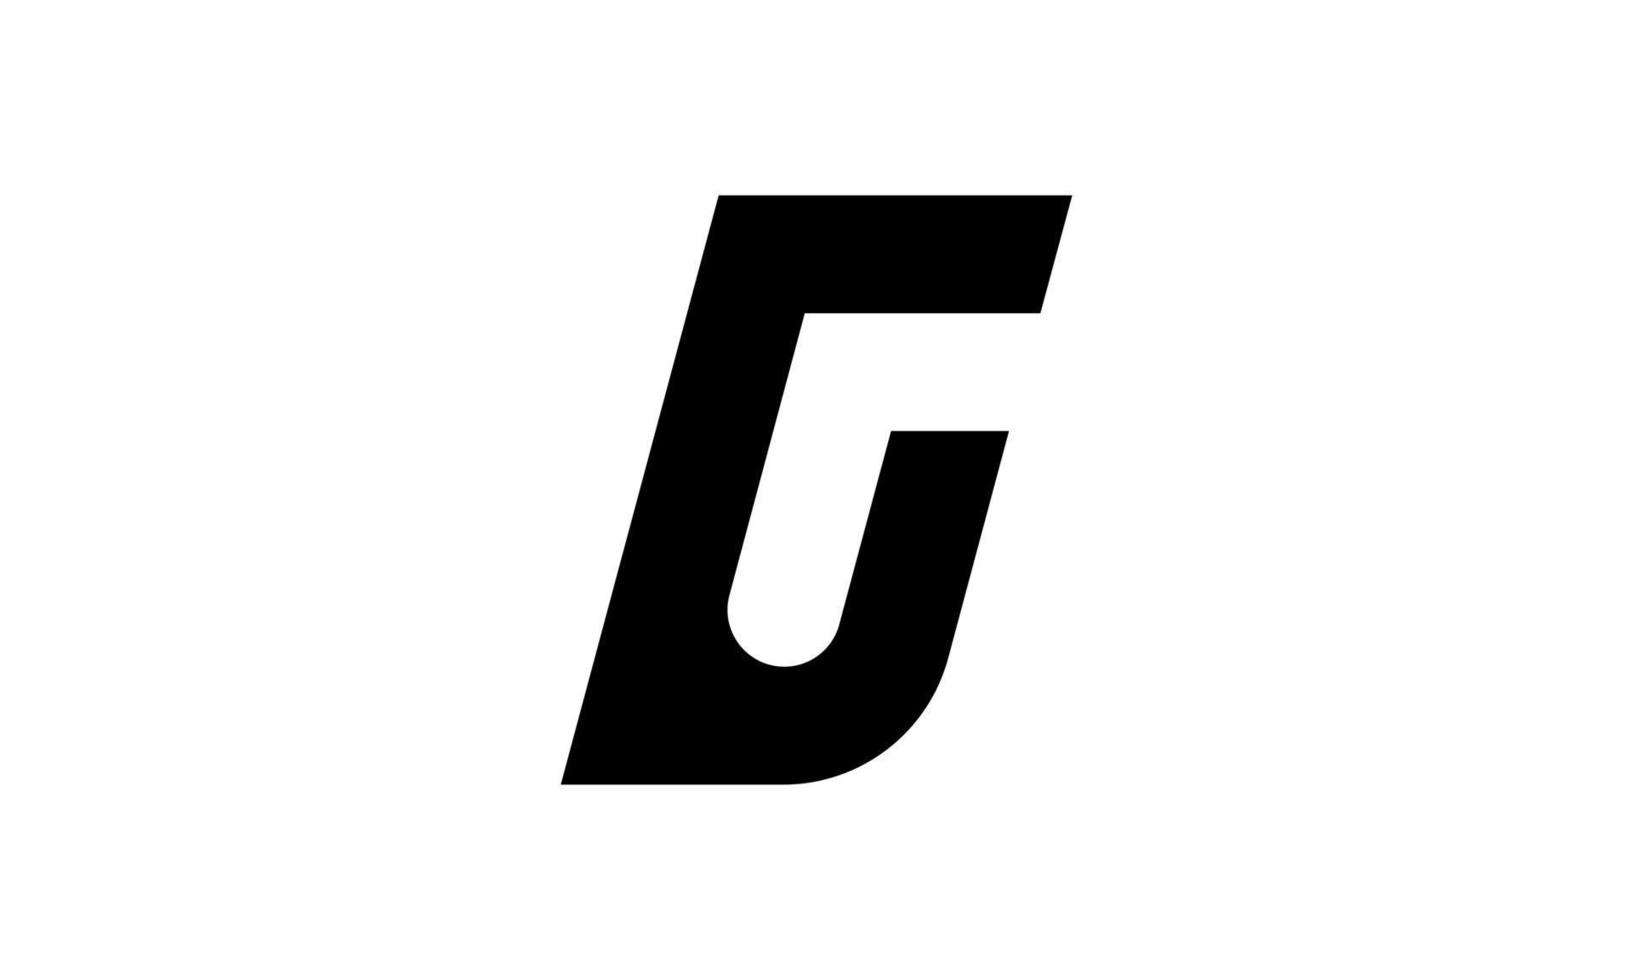 design de logotipo letra g. design inicial do logotipo da letra g. g logotipo vector design de ícone. g modelo de vetor livre de design de logotipo simples.